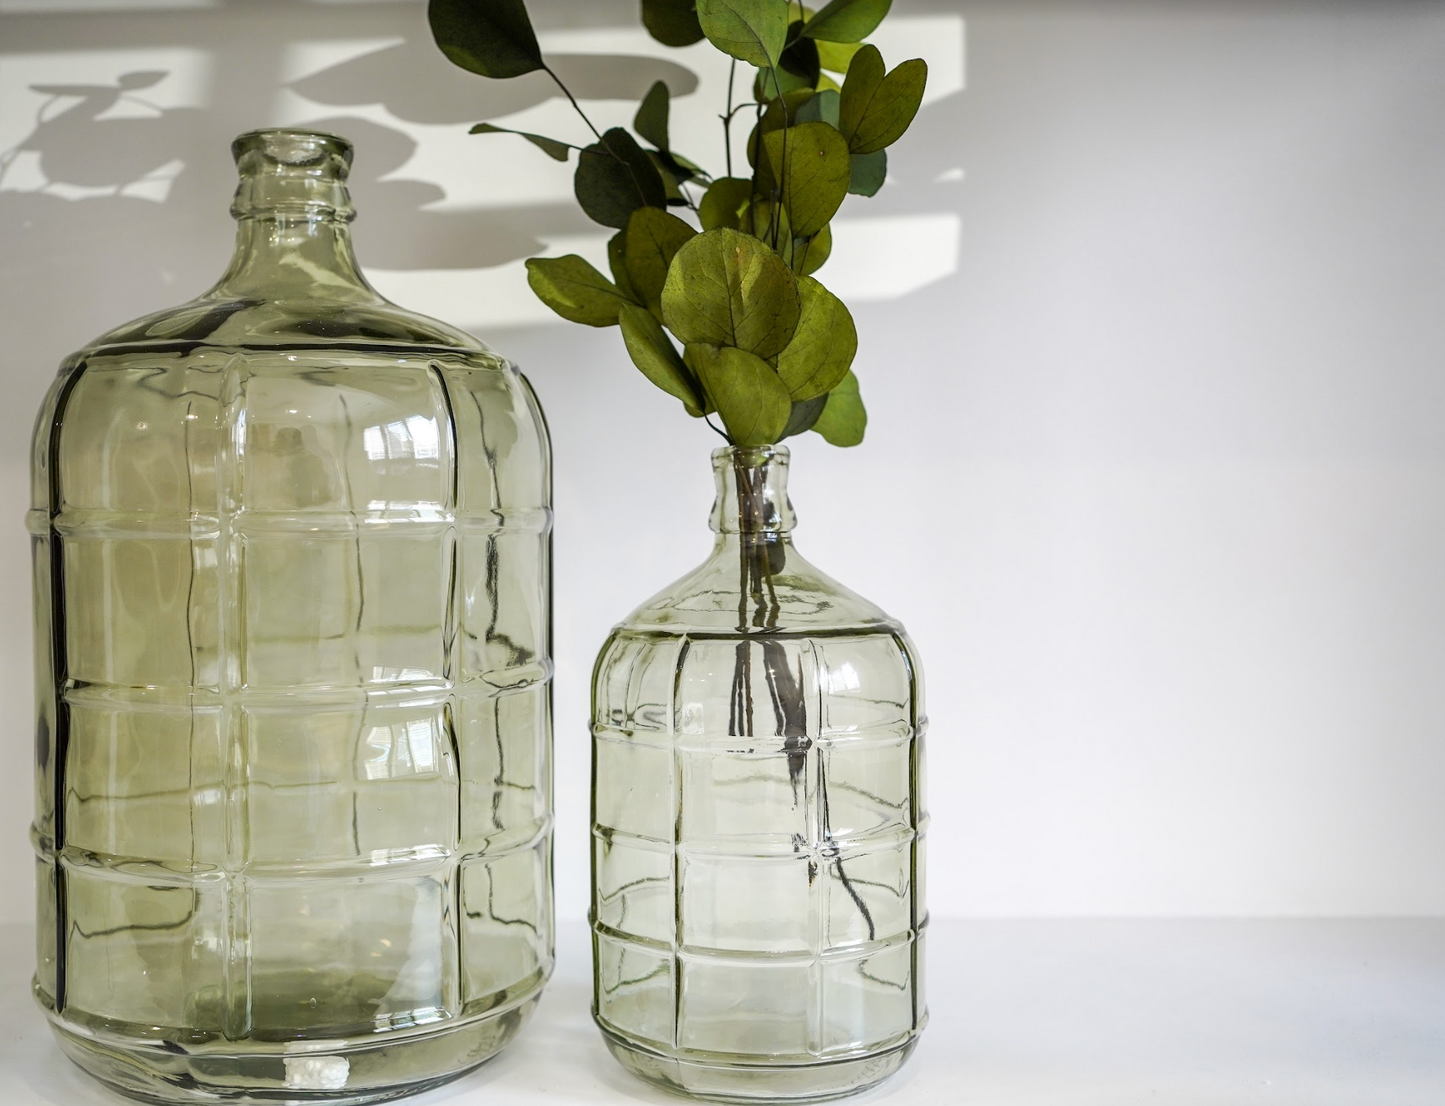 The Essential Glass vase